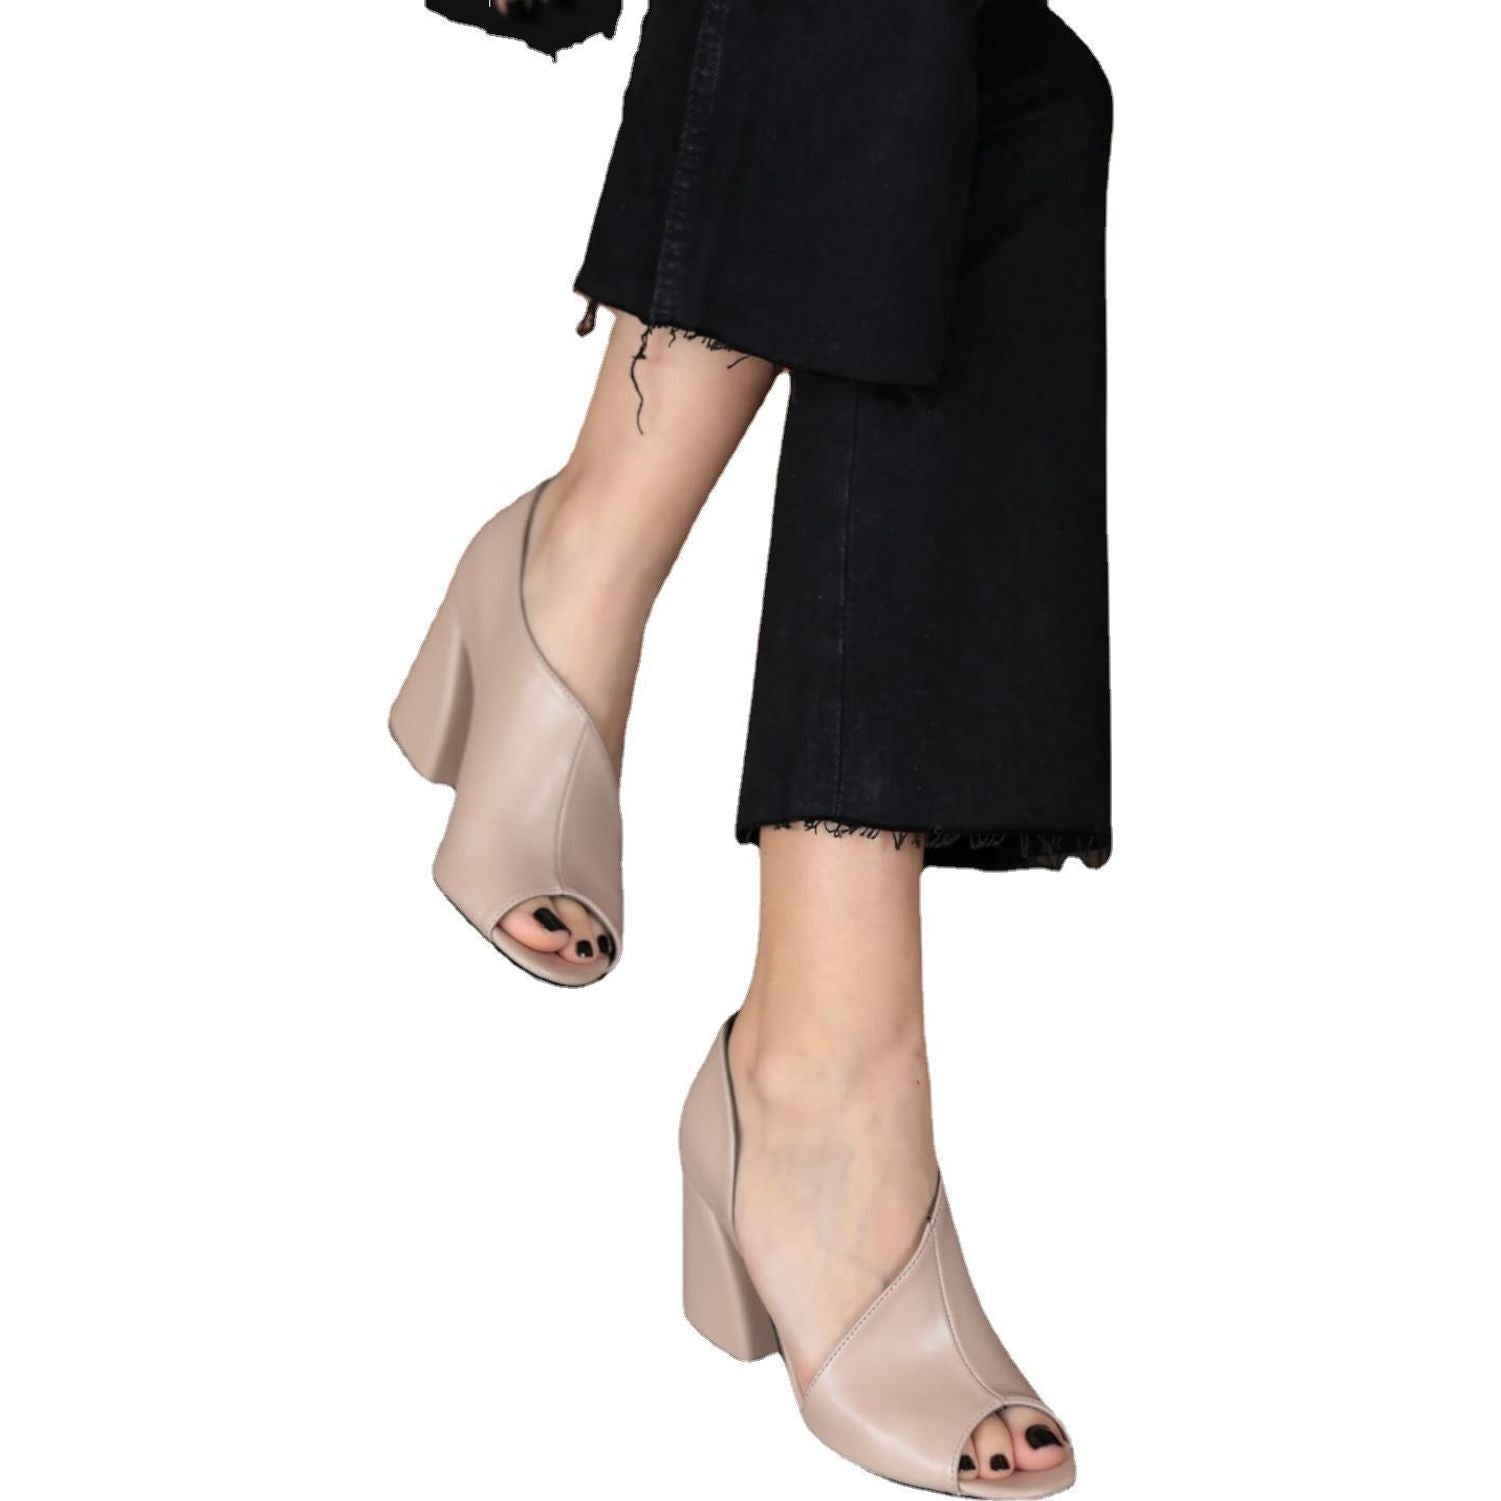 Buy Online Premimum Quality, Trendy and Highly Comfortable Peep Toe Sandals Women Chunky Block High Heel Shoes - FEYONAS